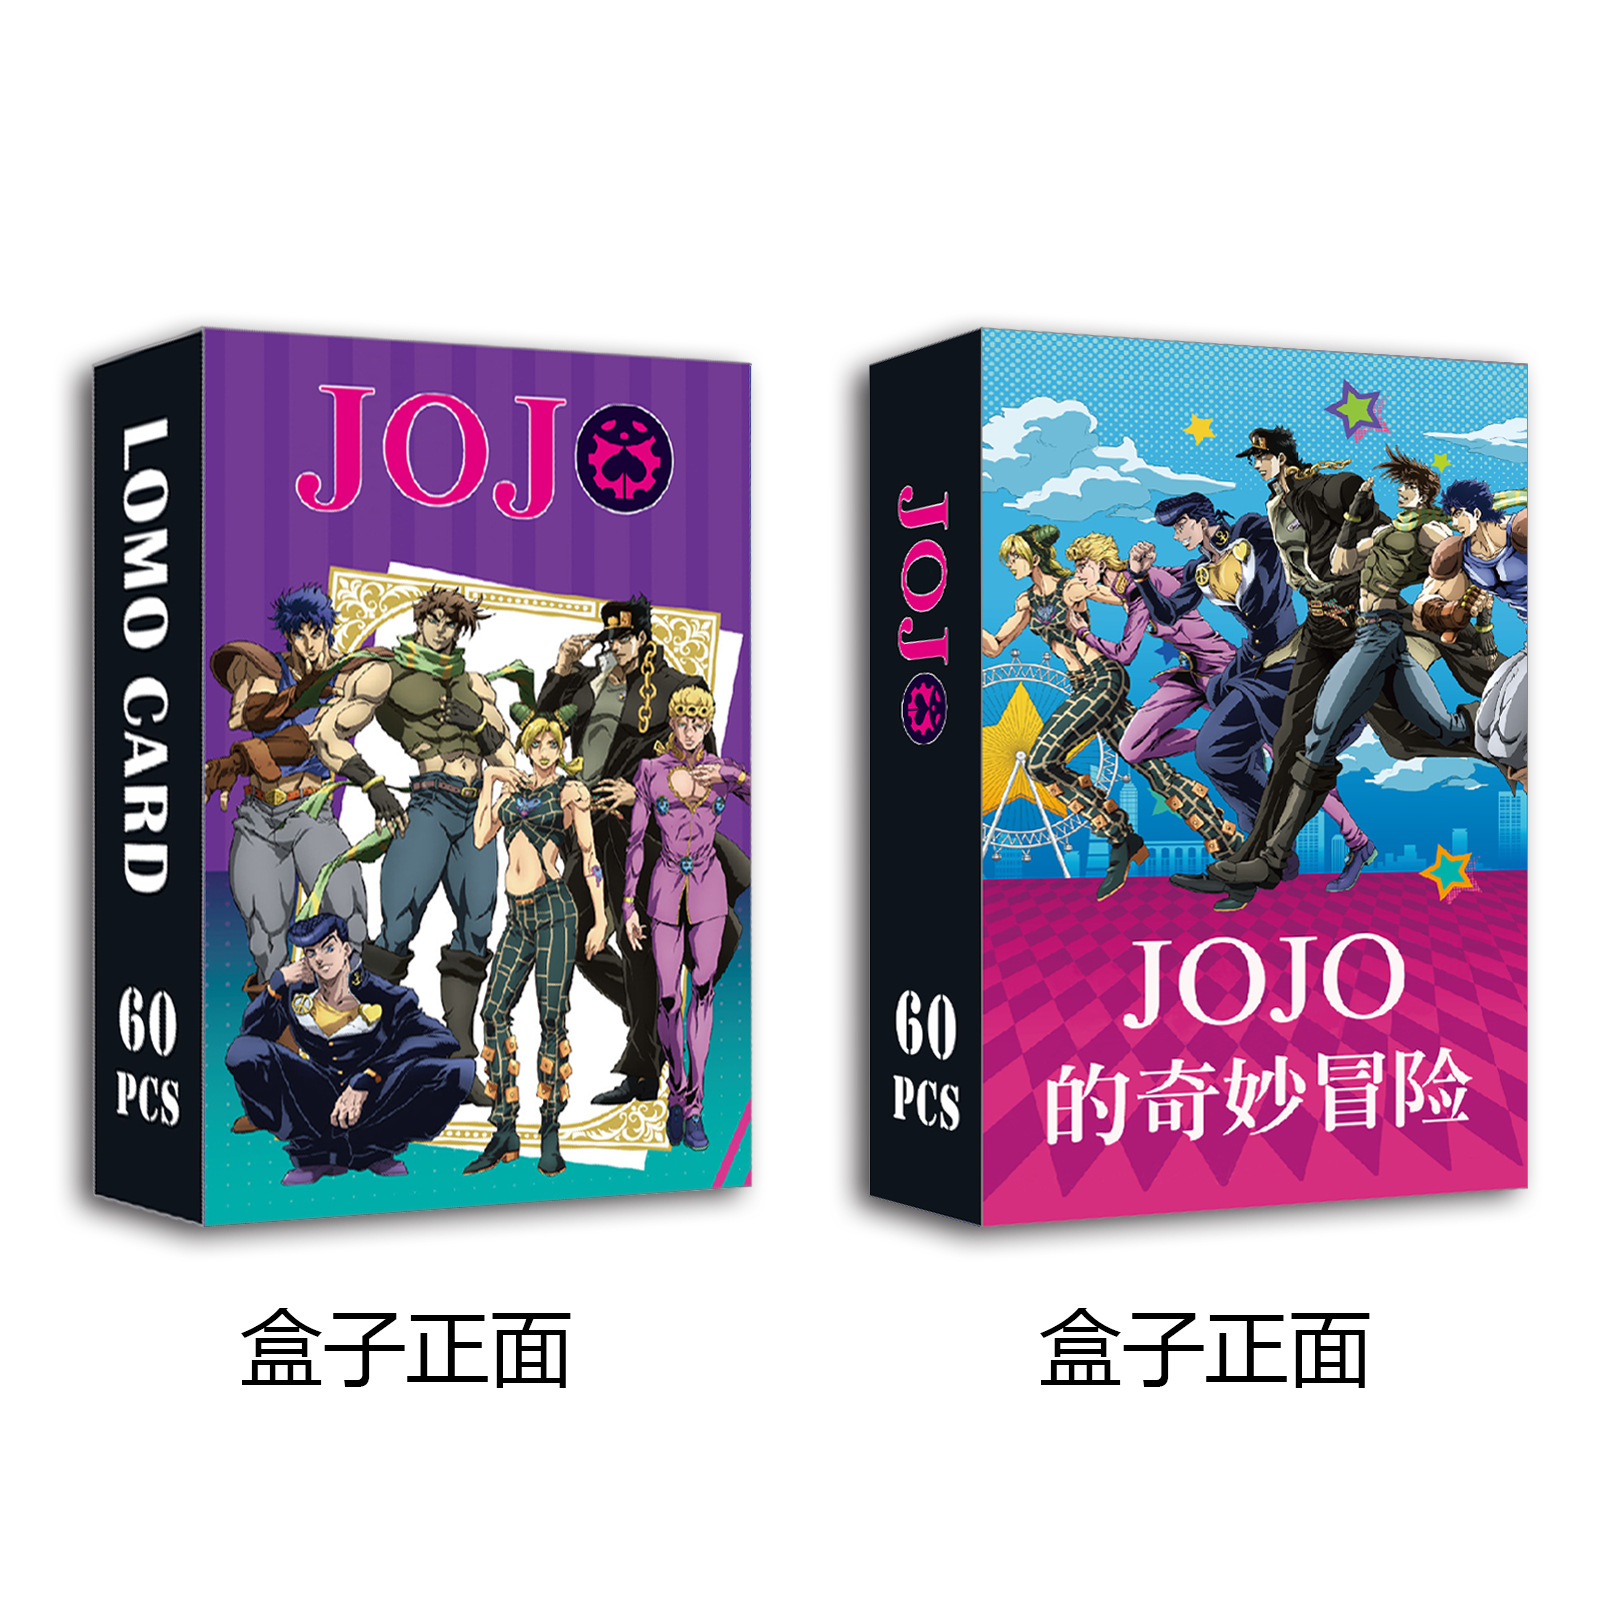 JoJos Bizarre Adventure anime lomo cards price for a set of 60 pcs